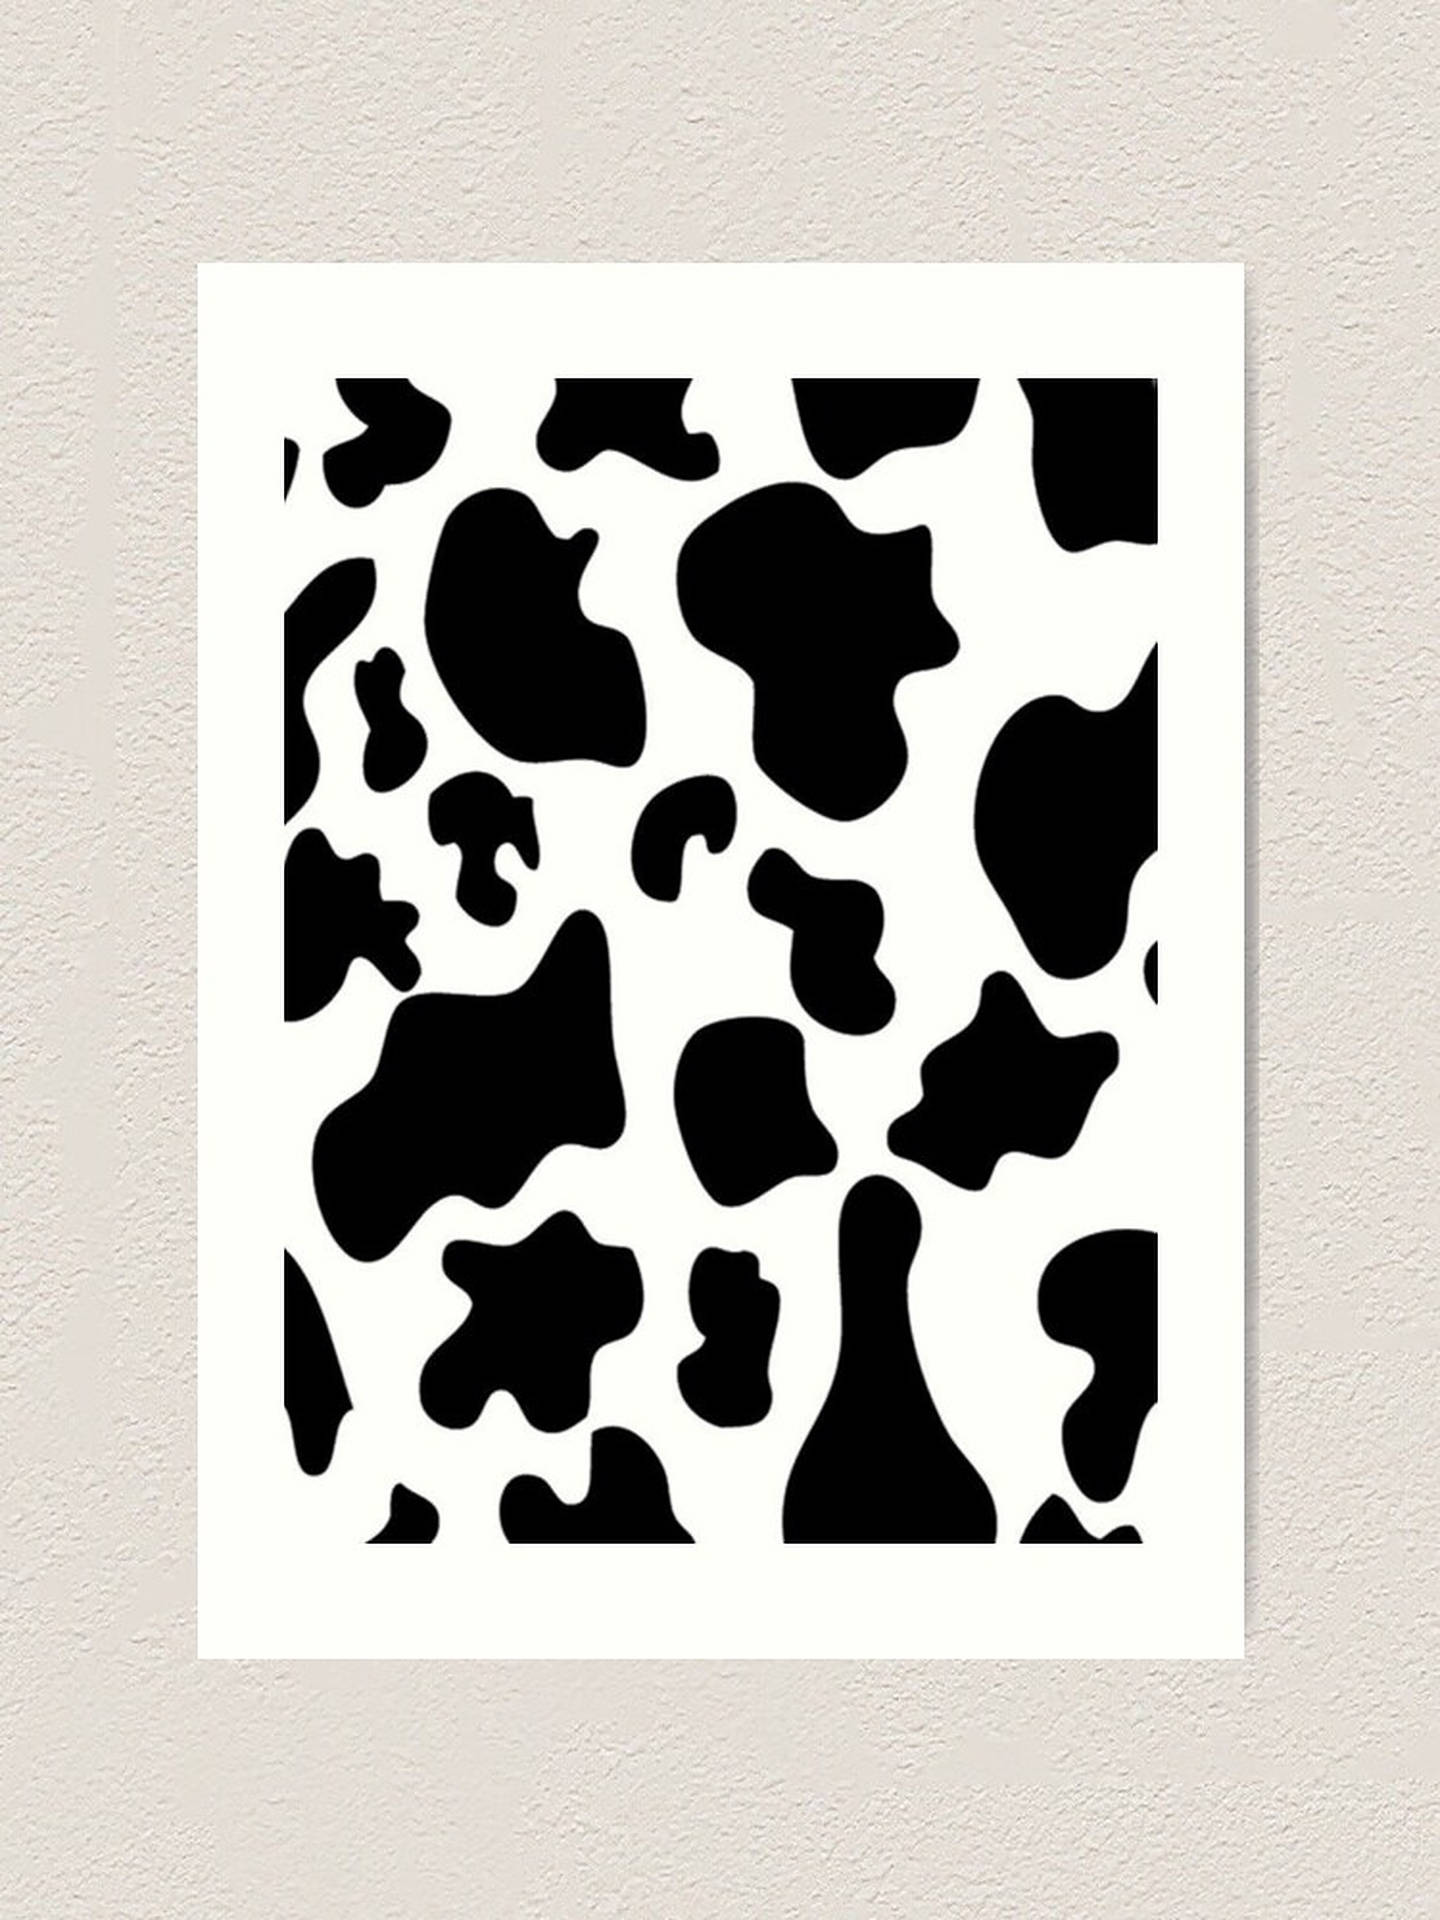 Free Cow Print Wallpaper Downloads, Cow Print Wallpaper for FREE